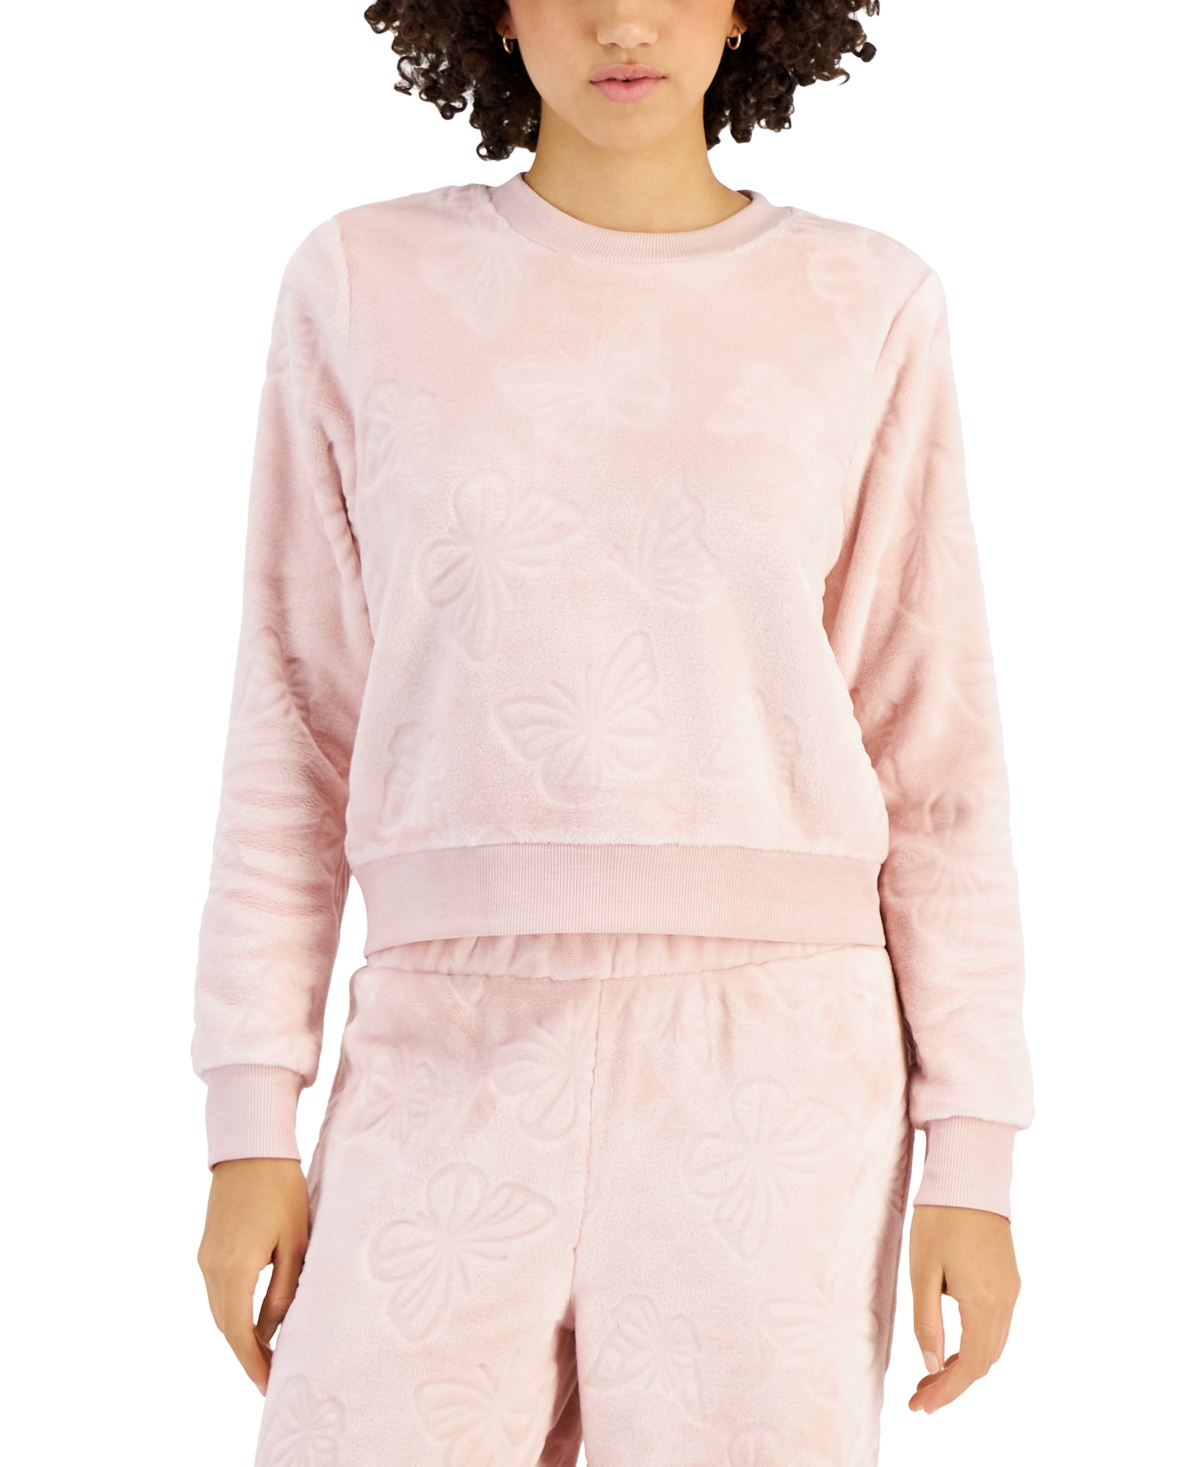 Juniors' Cozy Faux-Fur Embossed Crewneck Sweatshirt - Silver Pink Butterfly